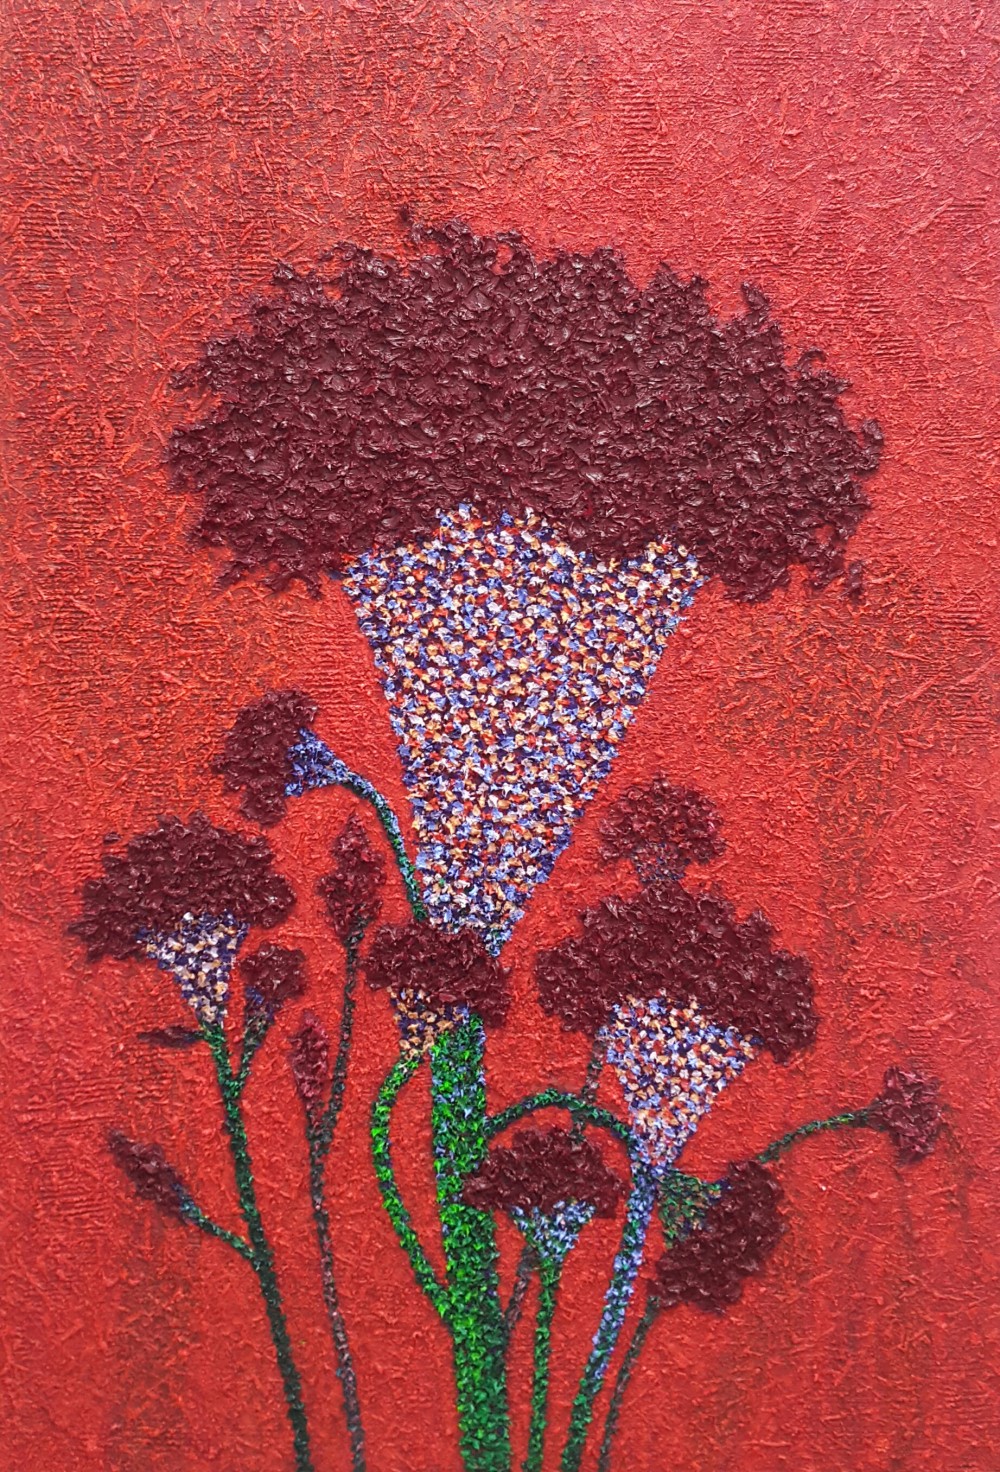 cockscomb-탱고 좋아해요, 116.8x80.3, oil on canvas, 2017